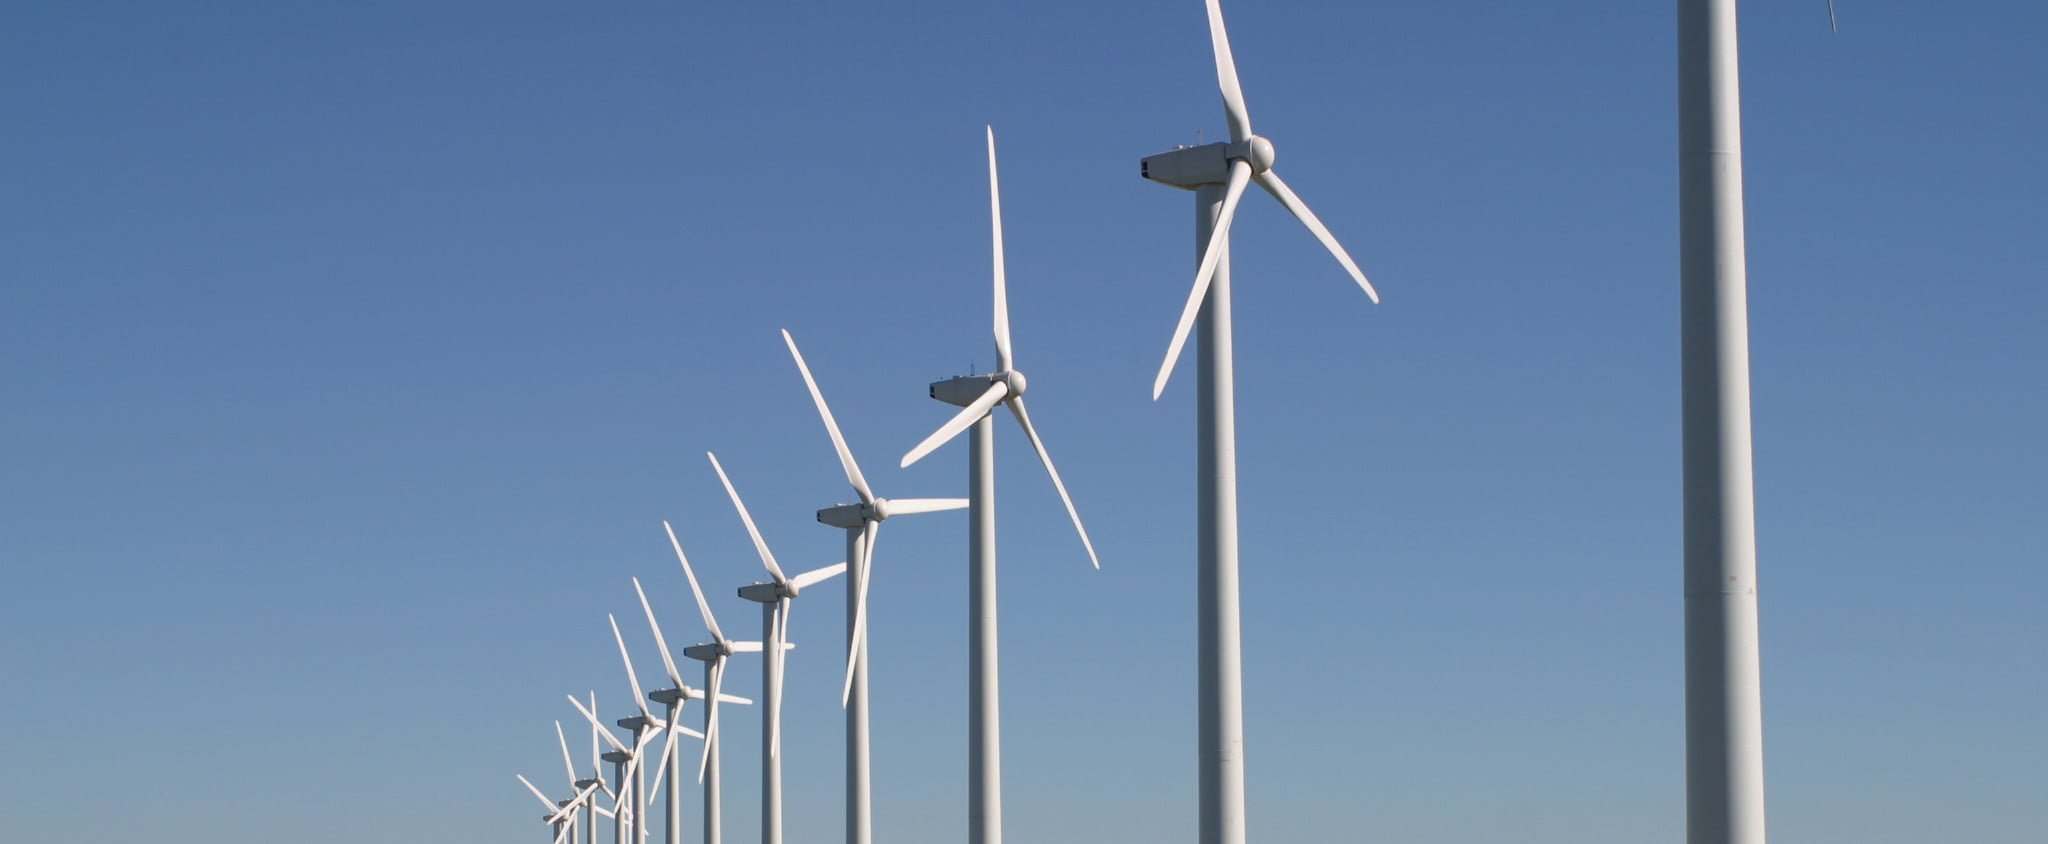 wind turbines e1426716313492 10 حقائق مذهلة عن طاقة الرياح مجلة نقطة العلمية